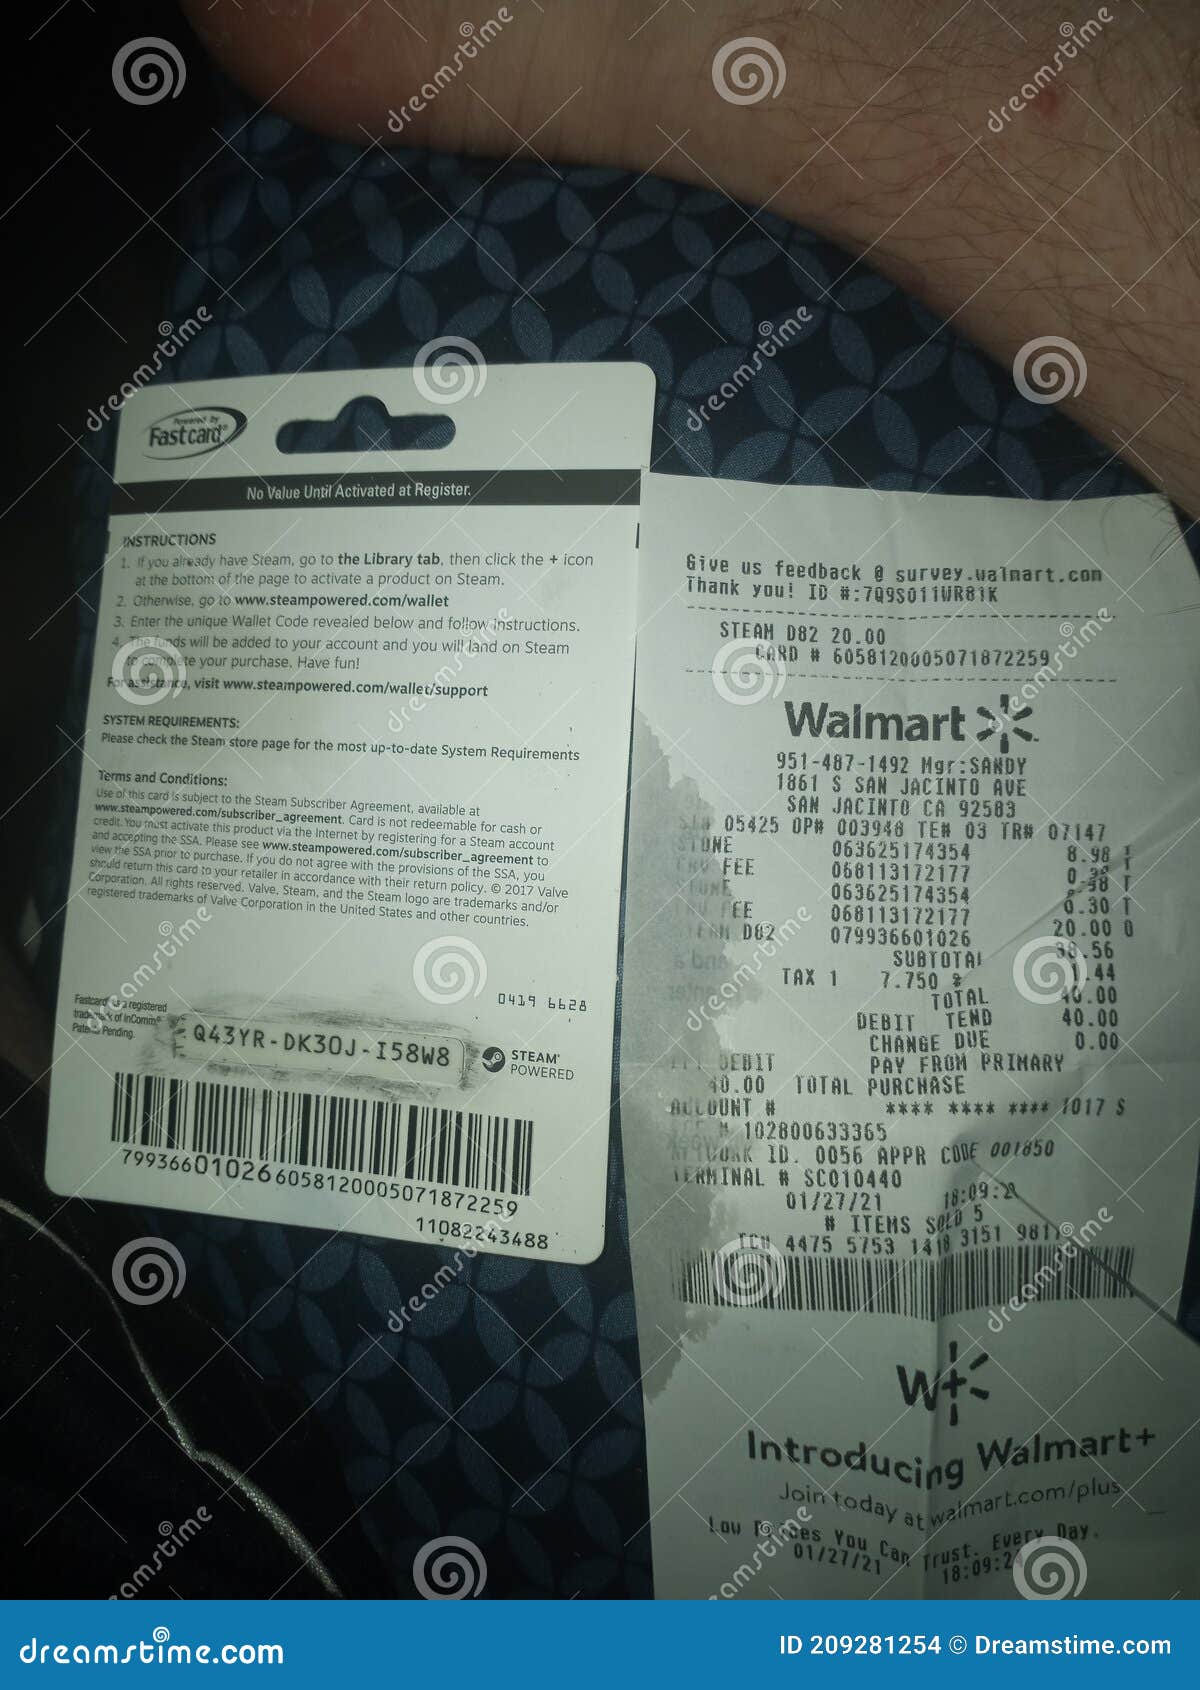 Get Cash for your WALMART Gift cards - Gameflip